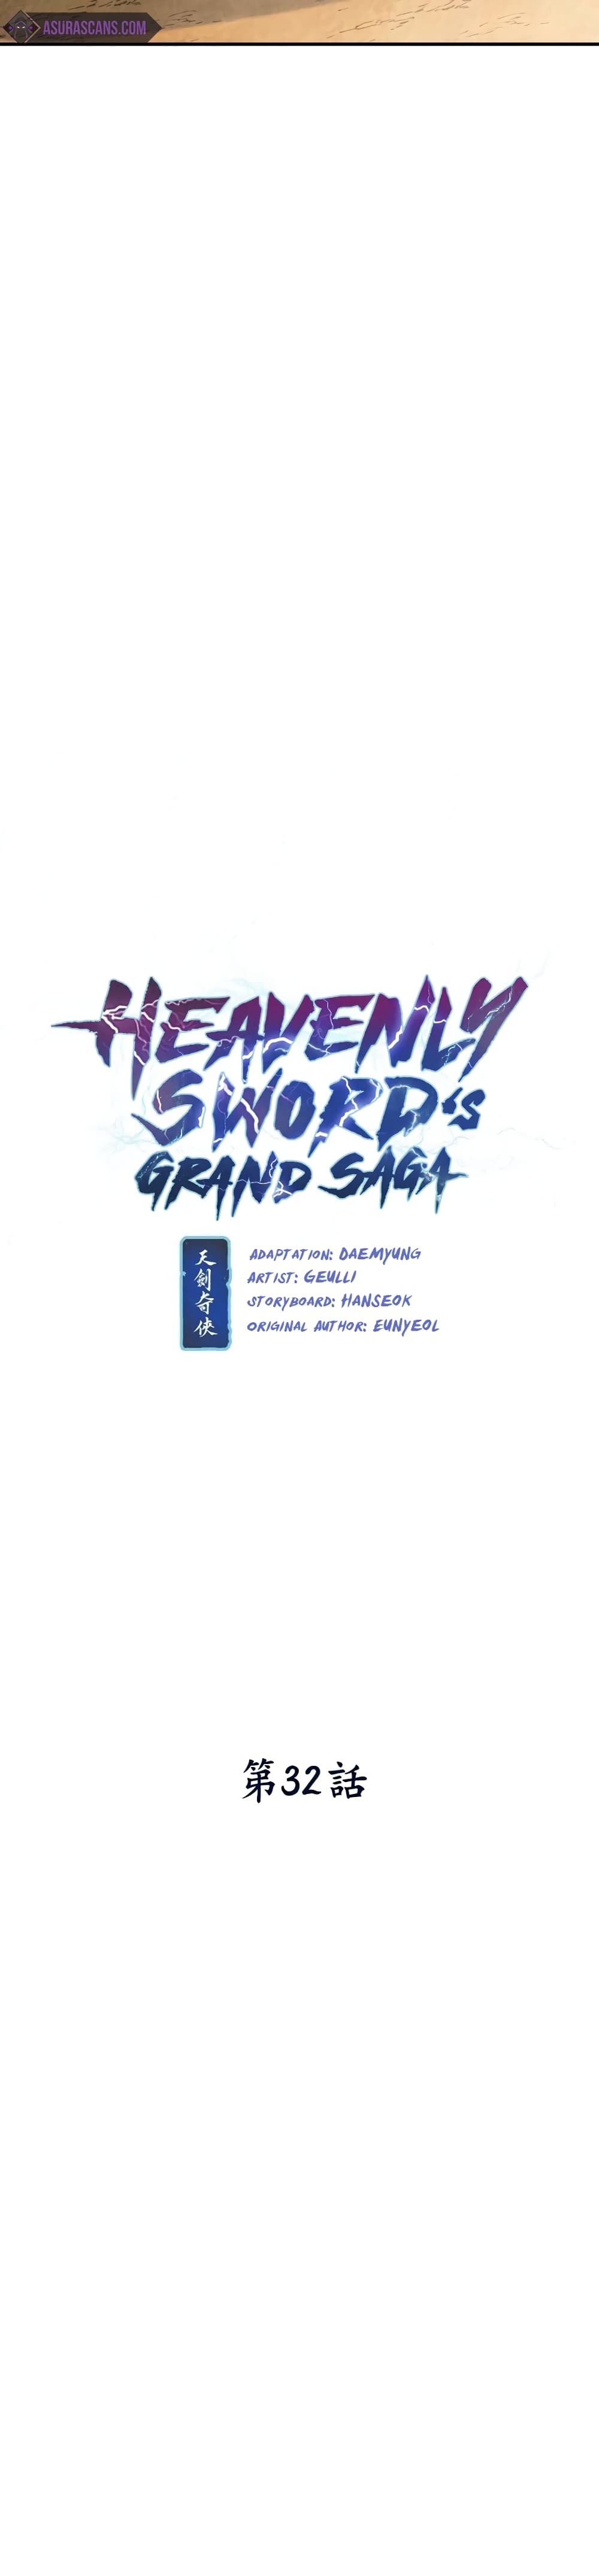 Heavenly Sword’s Grand Saga 32-32